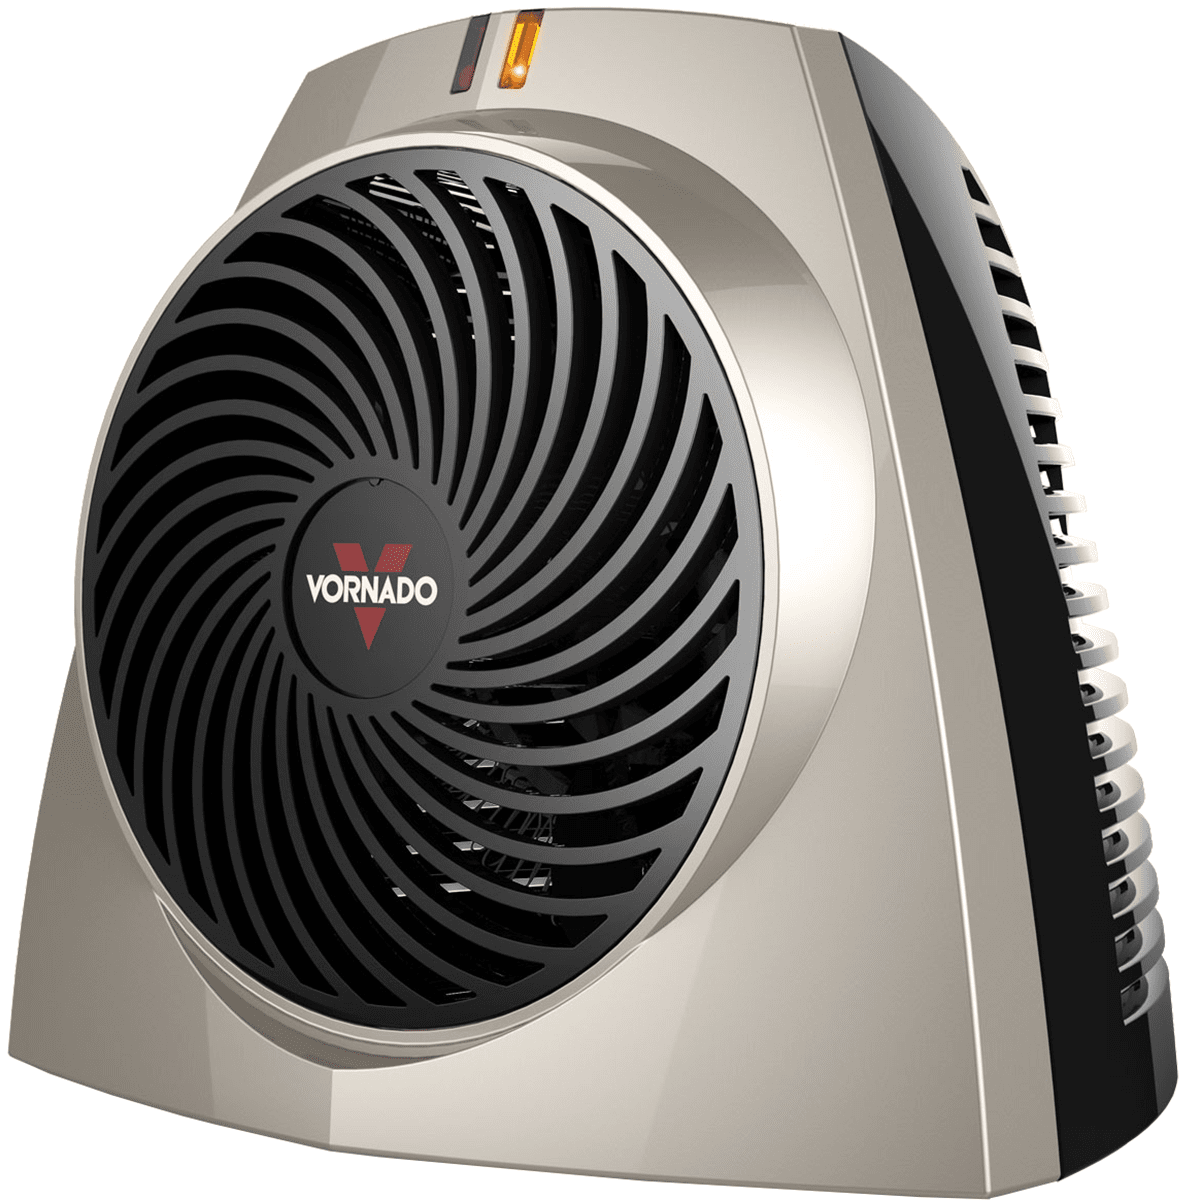 Vornado Vh203 Personal Heater